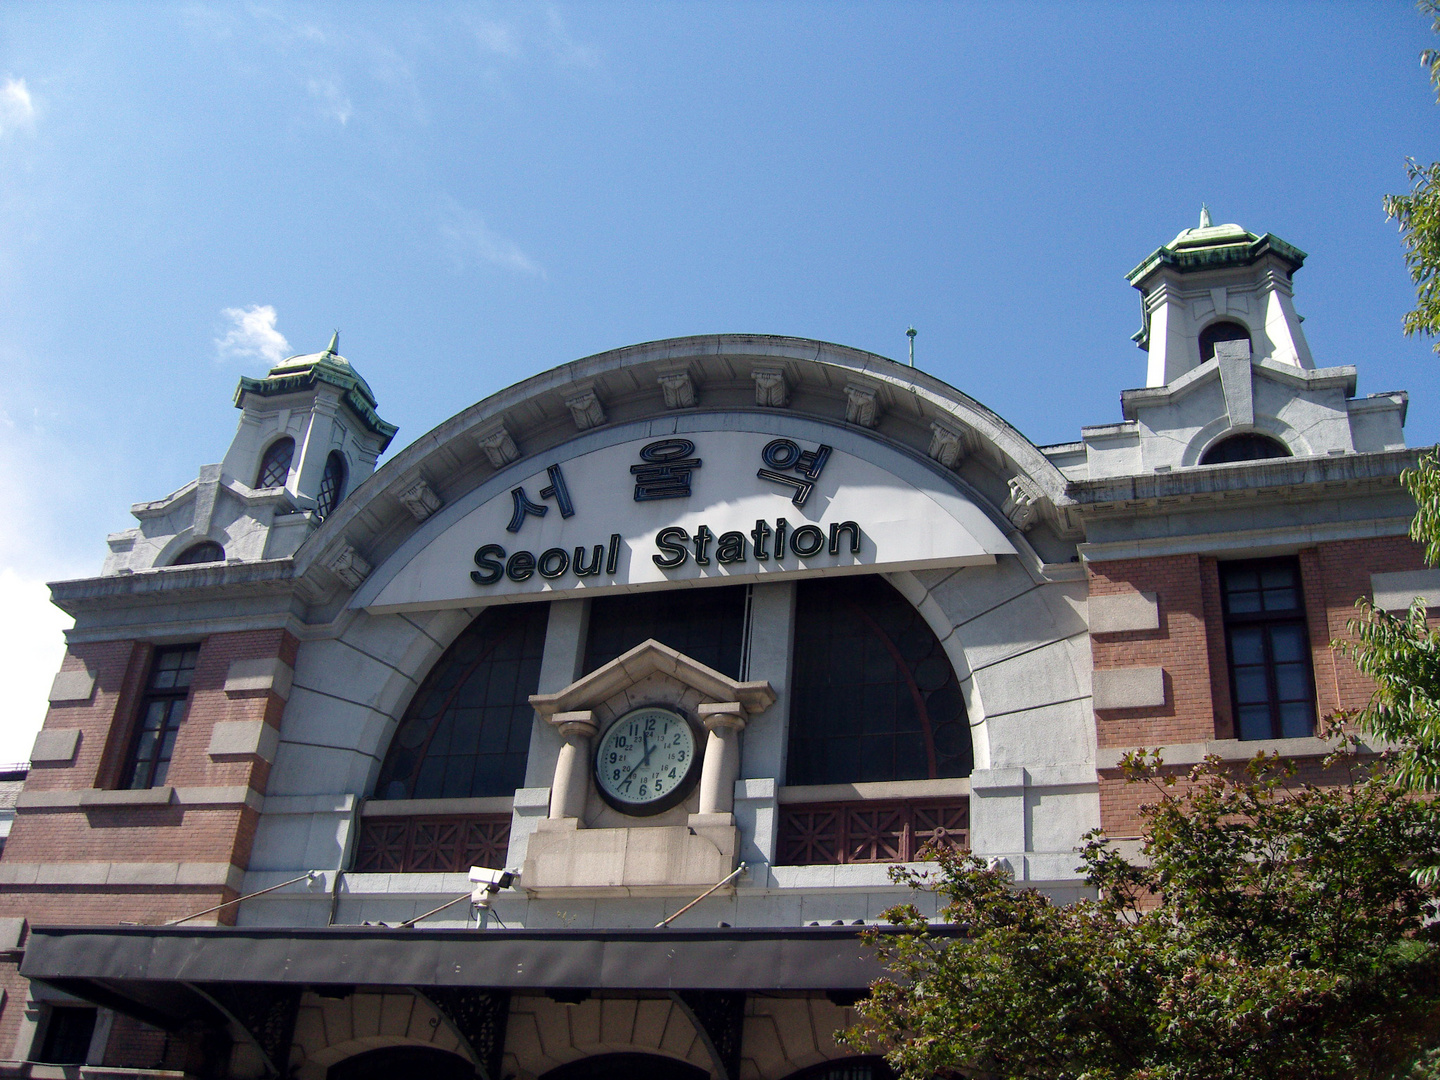 Old Seoul Station Building